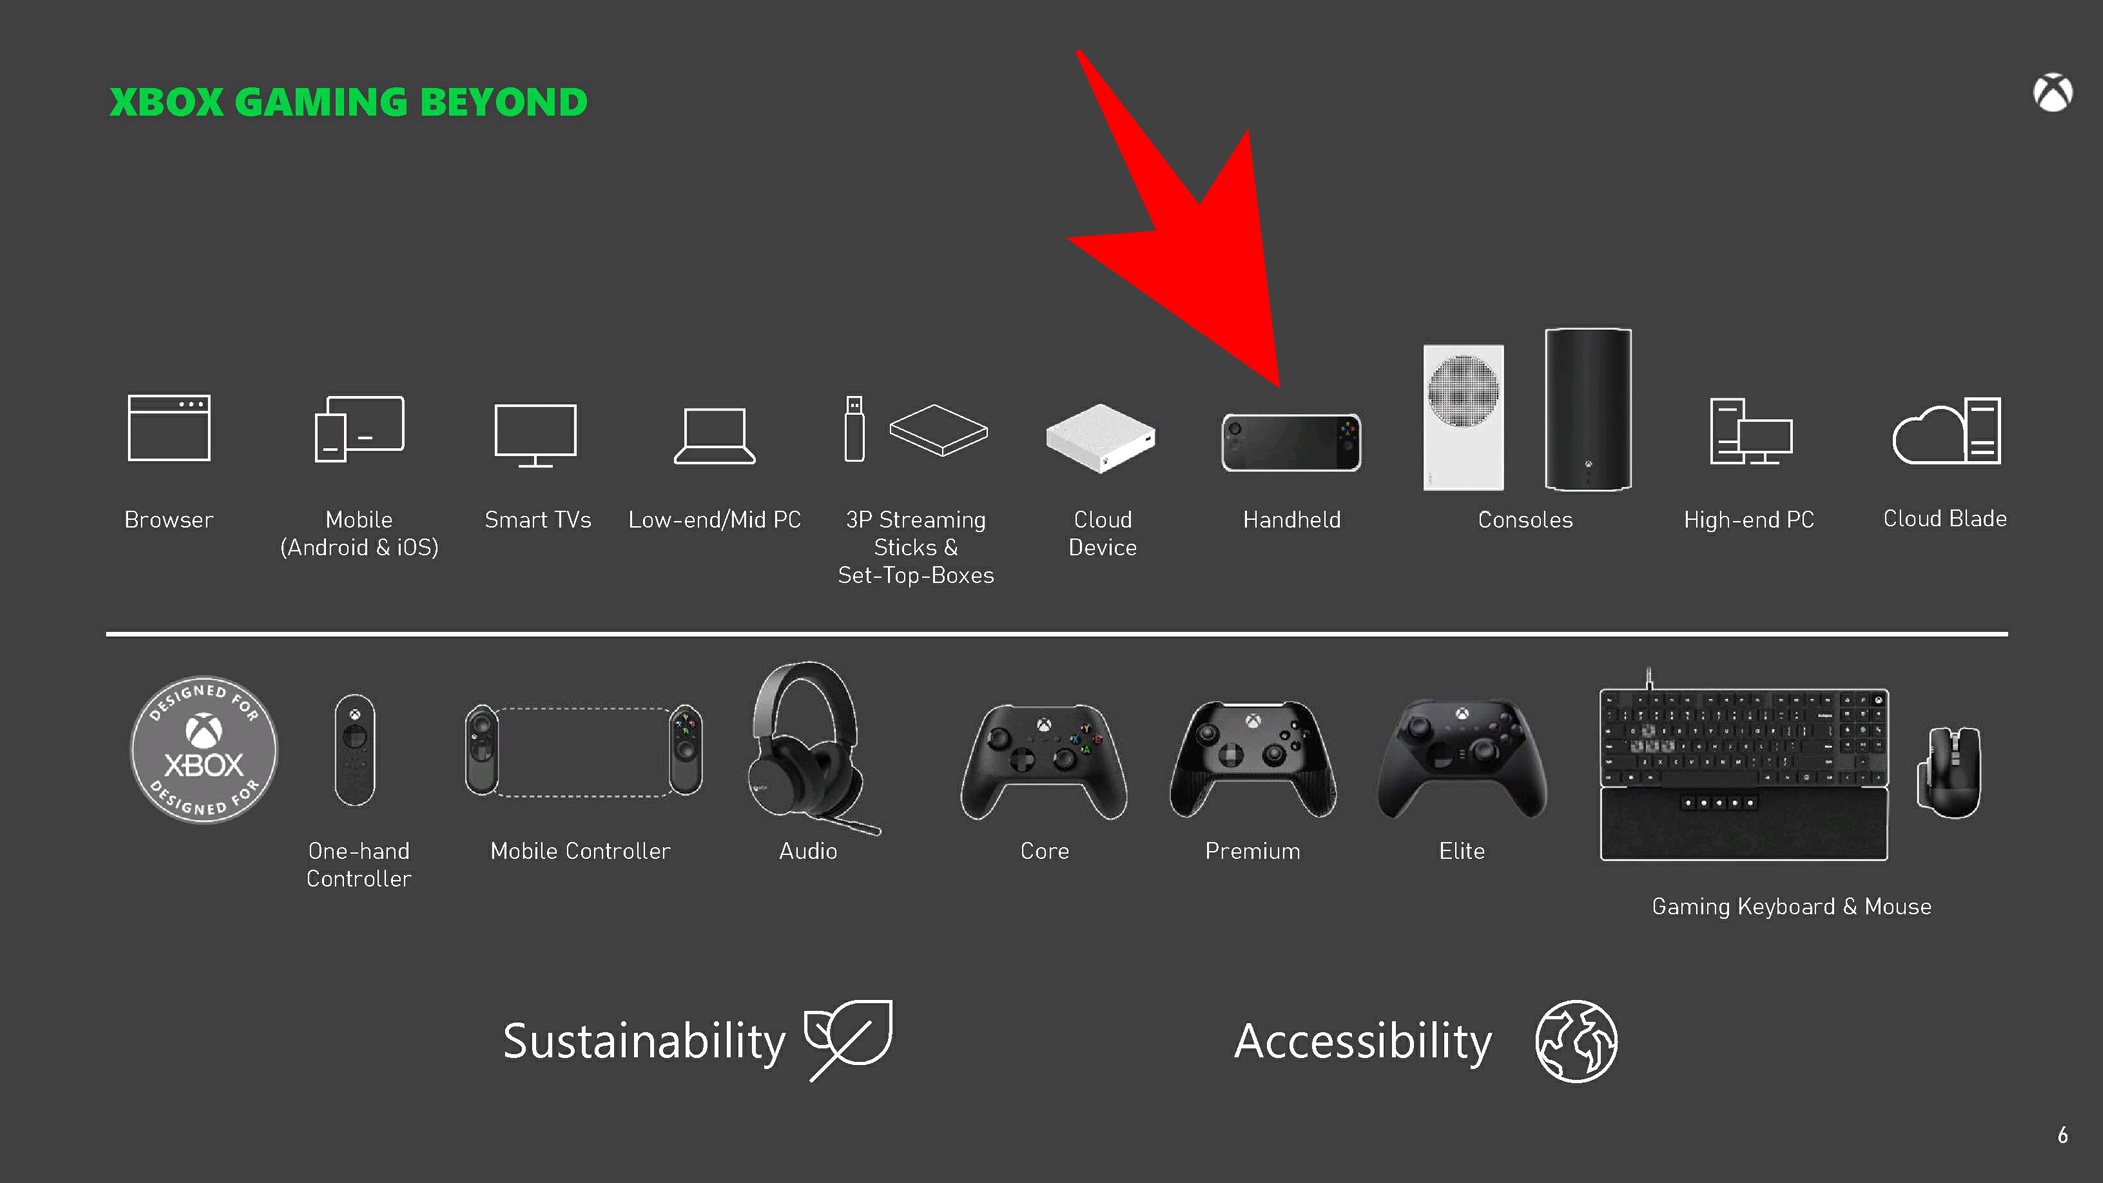 (A handheld is on the Xbox developer's radar. (Image: Microsoft / FTC))